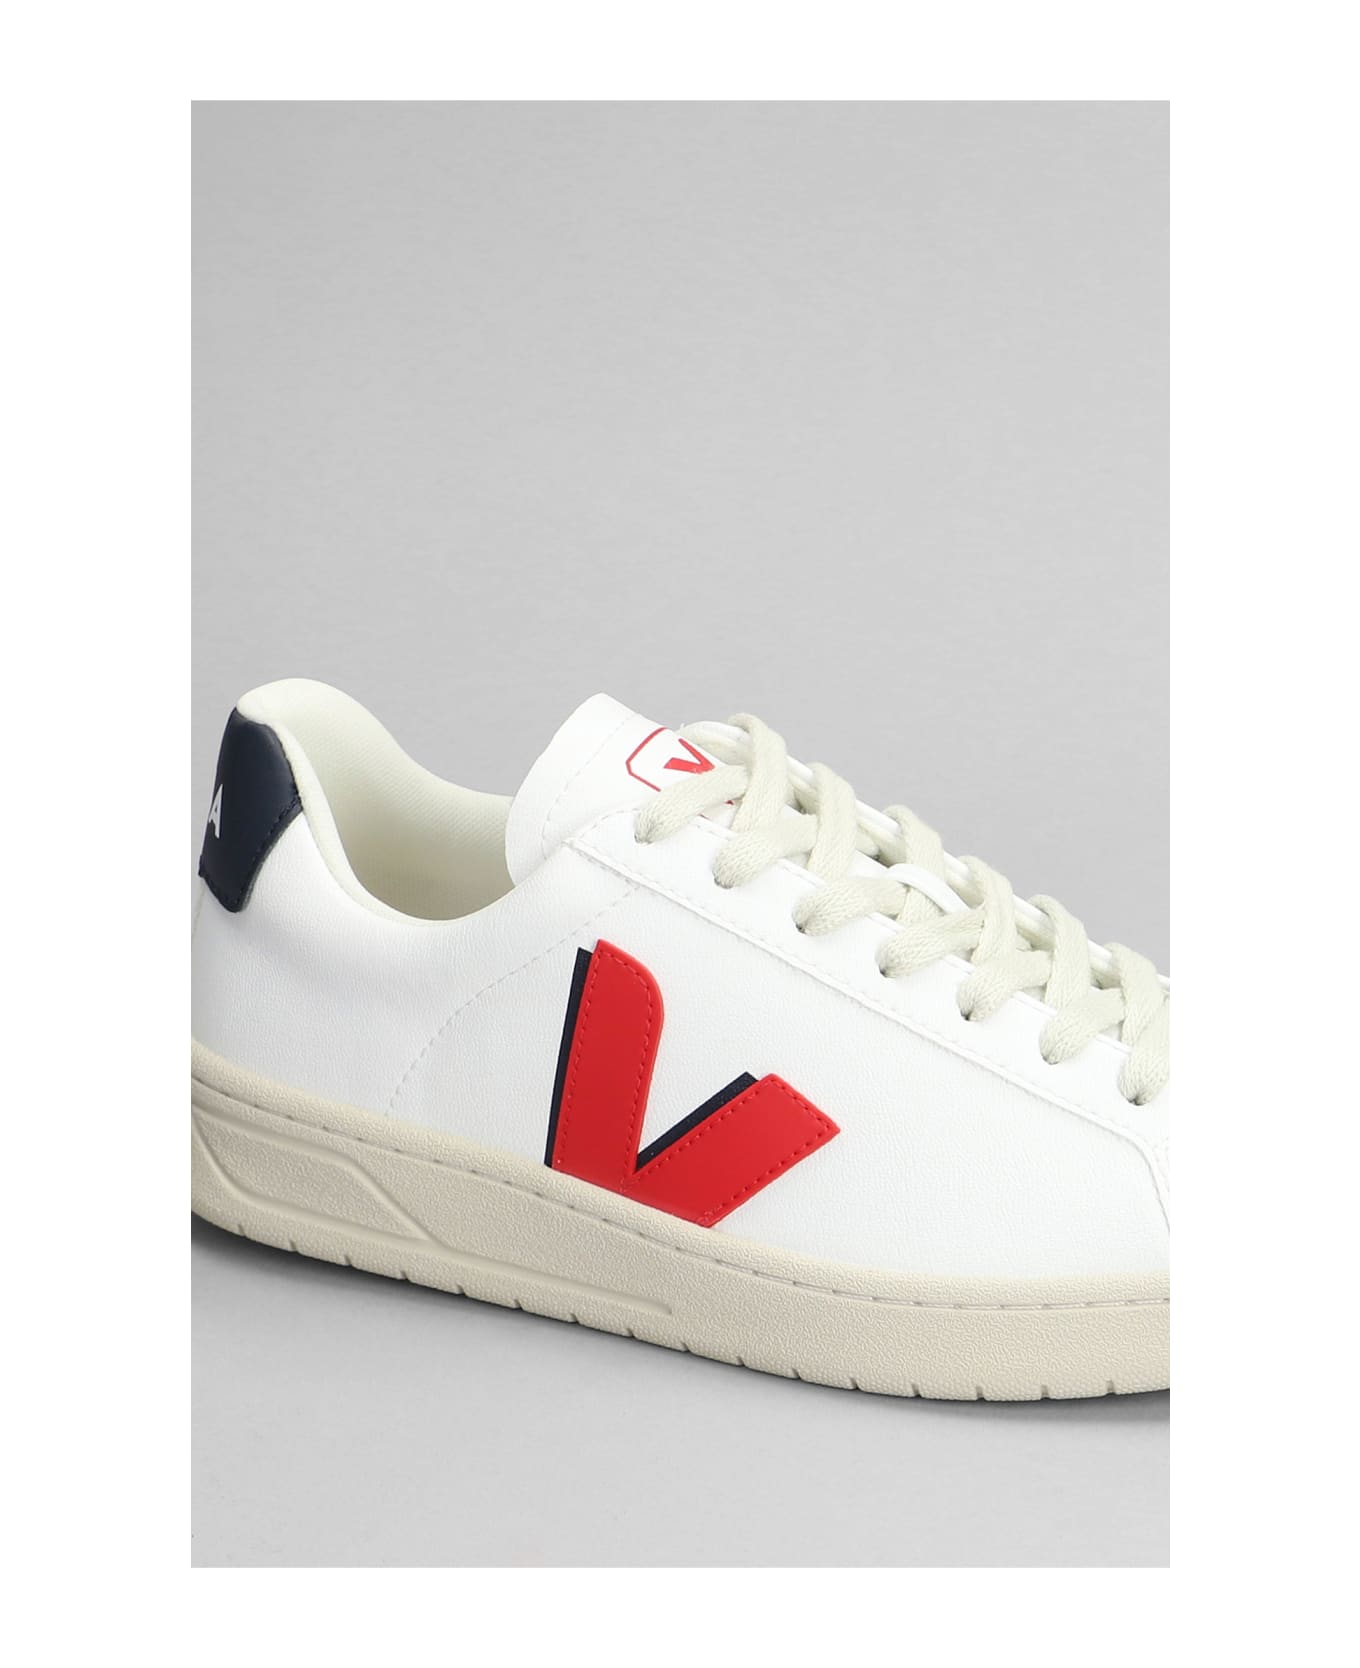 Veja Urca Sneakers In White Leather - white